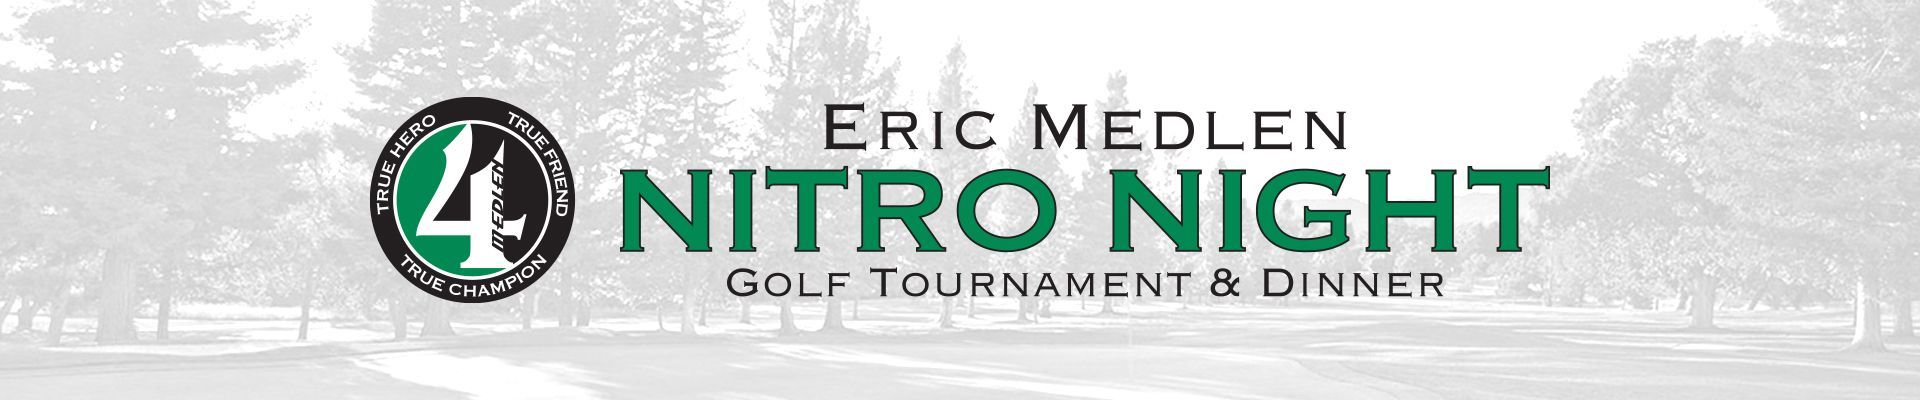 Eric Medlen Nitro Night Golf Tournament & Dinner Header